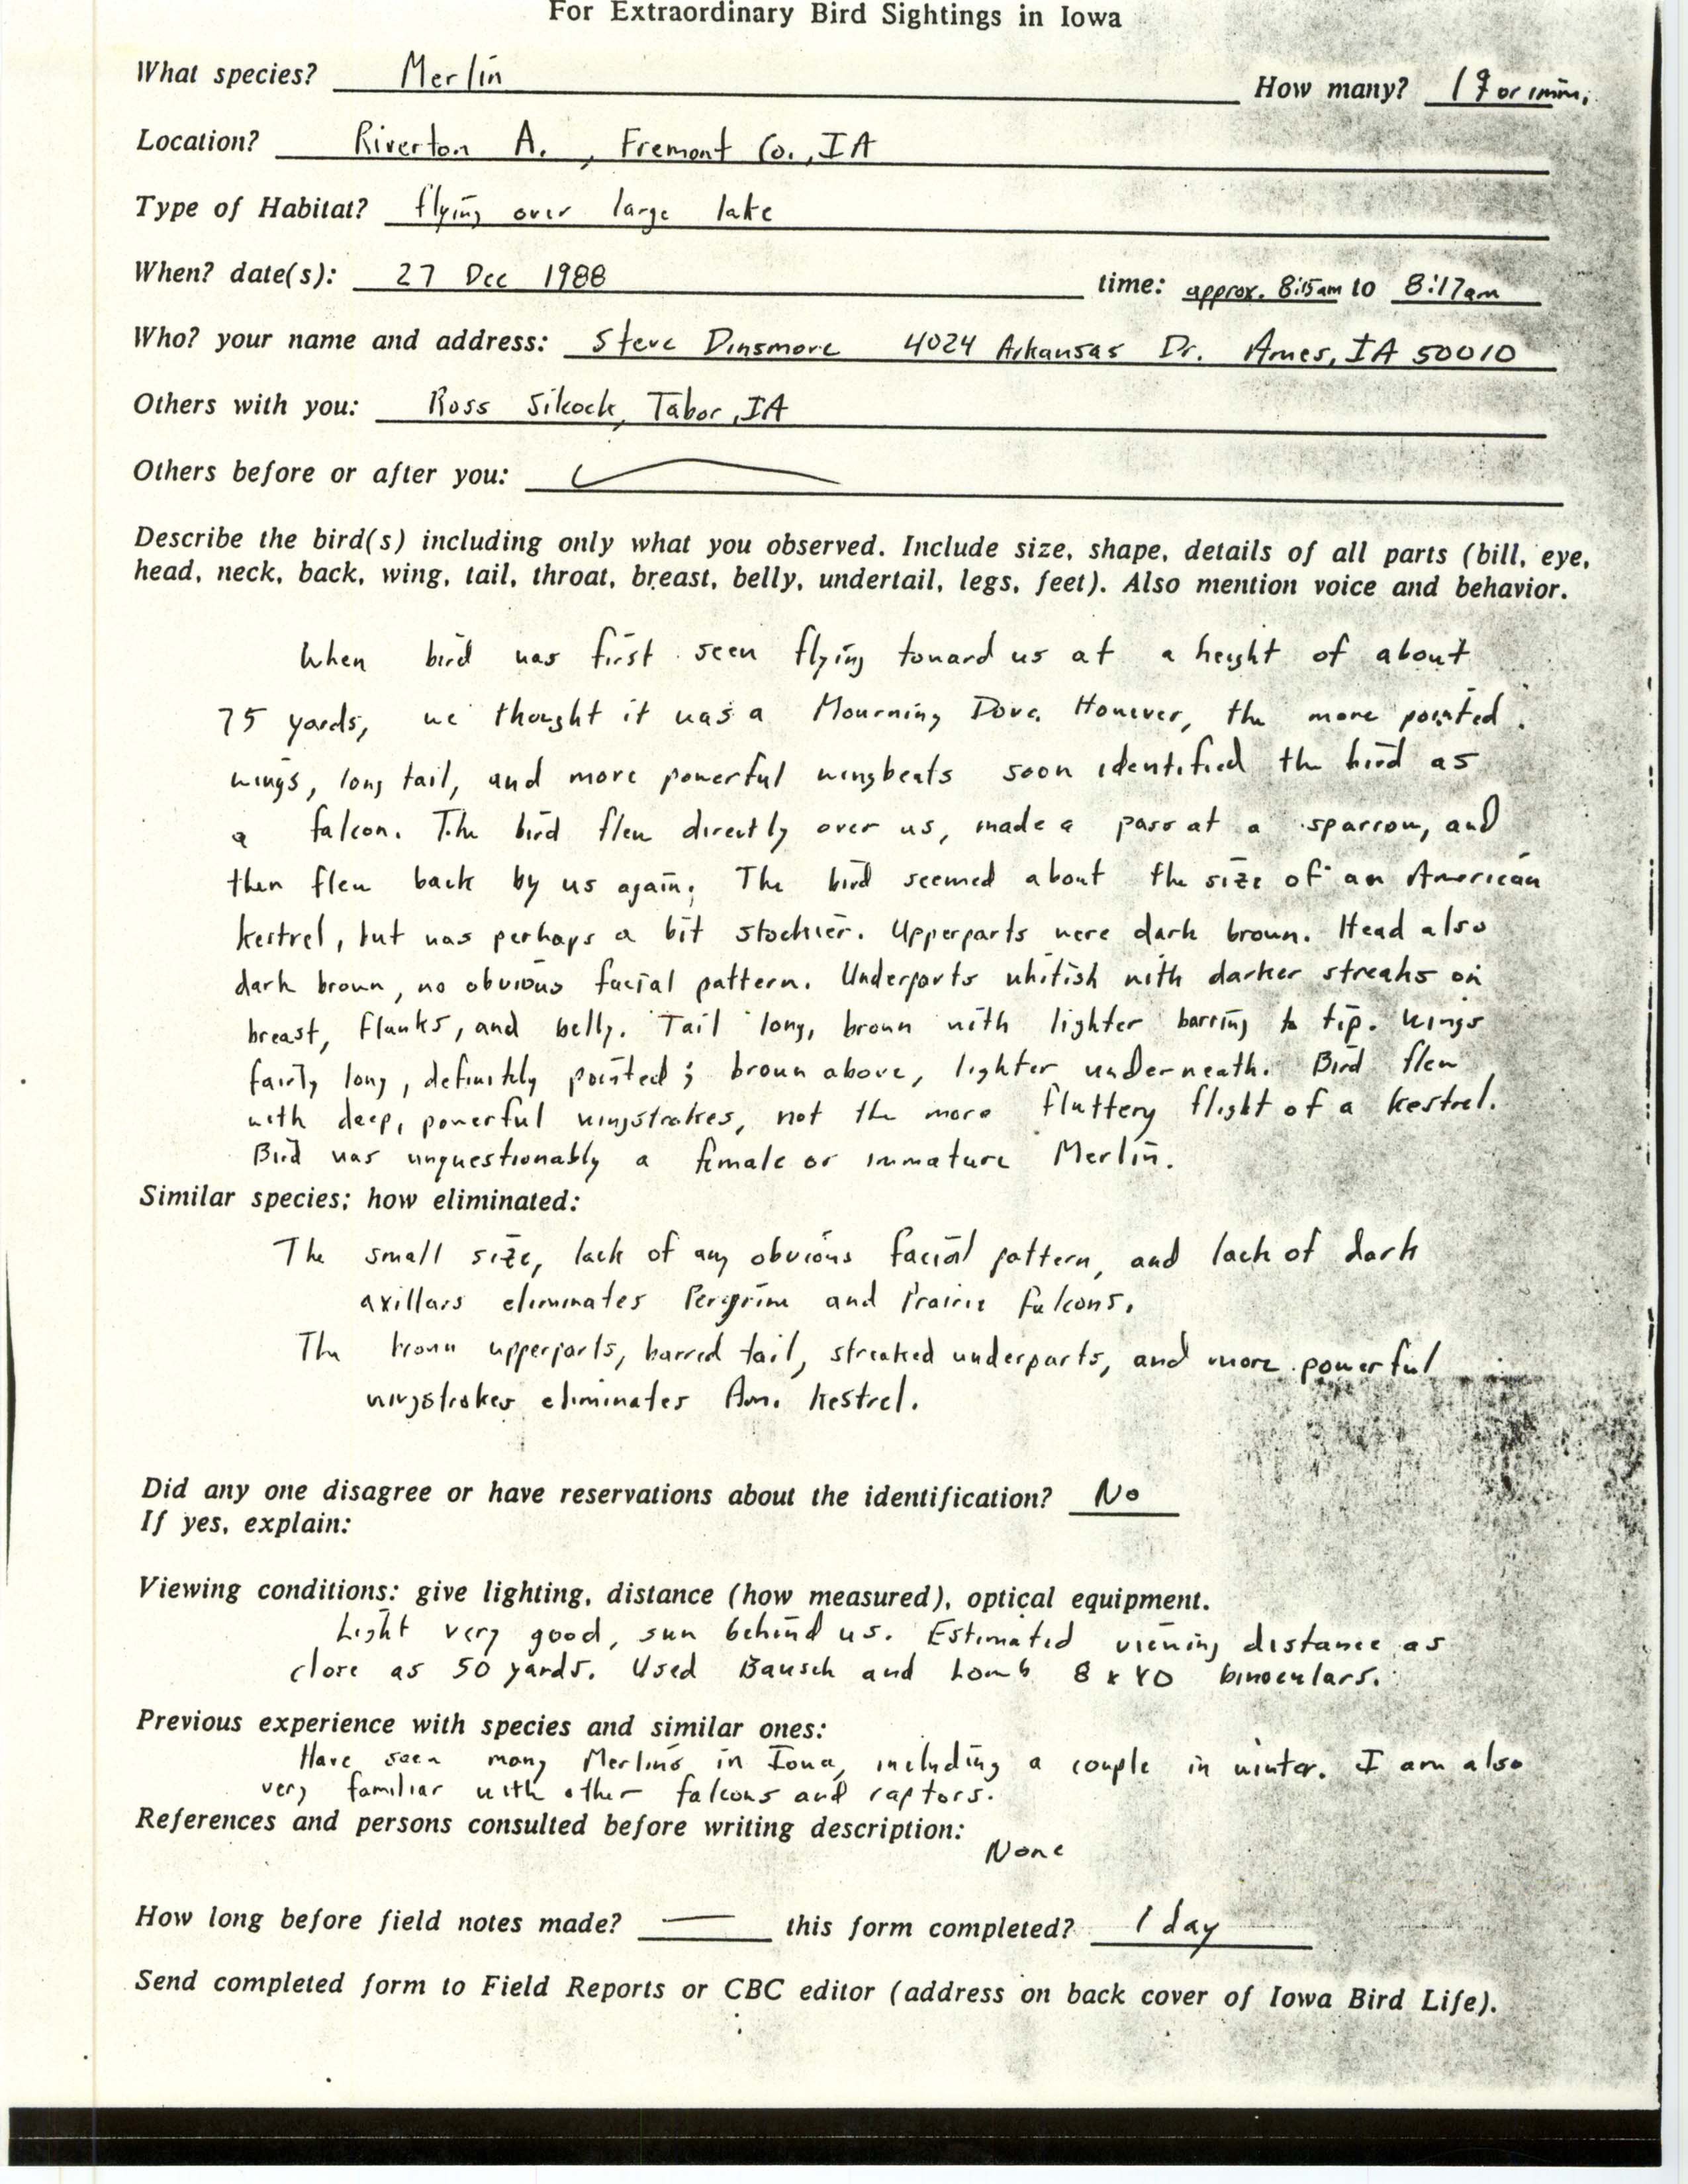 Rare bird documentation form for Merlin at Riverton Area, 1988